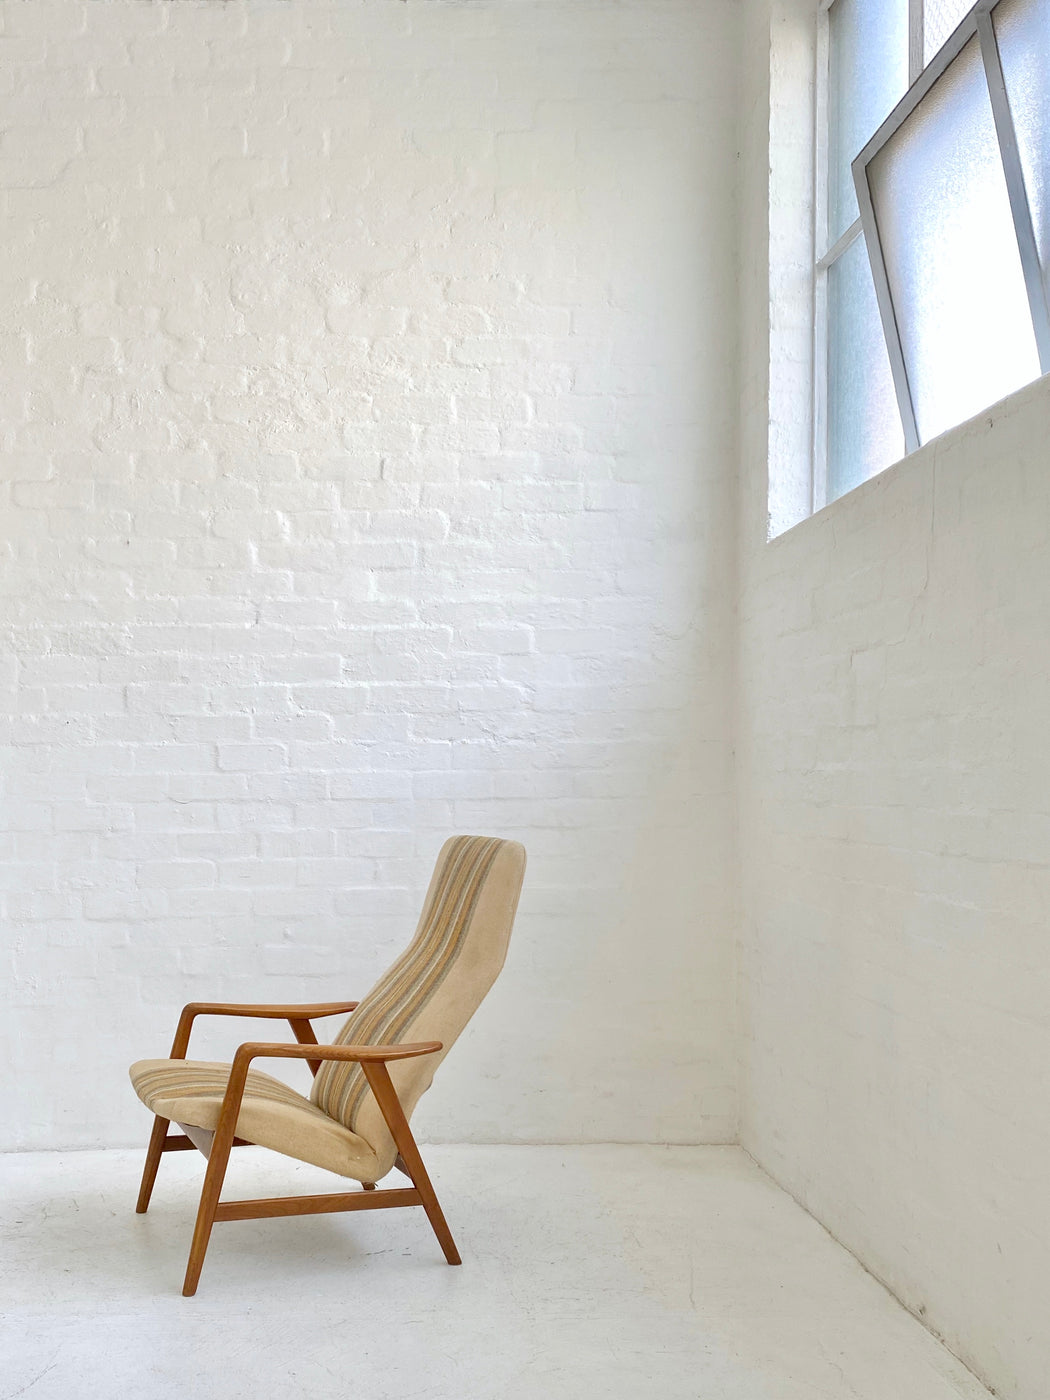 Alf Svennson 'Kontour' Chair